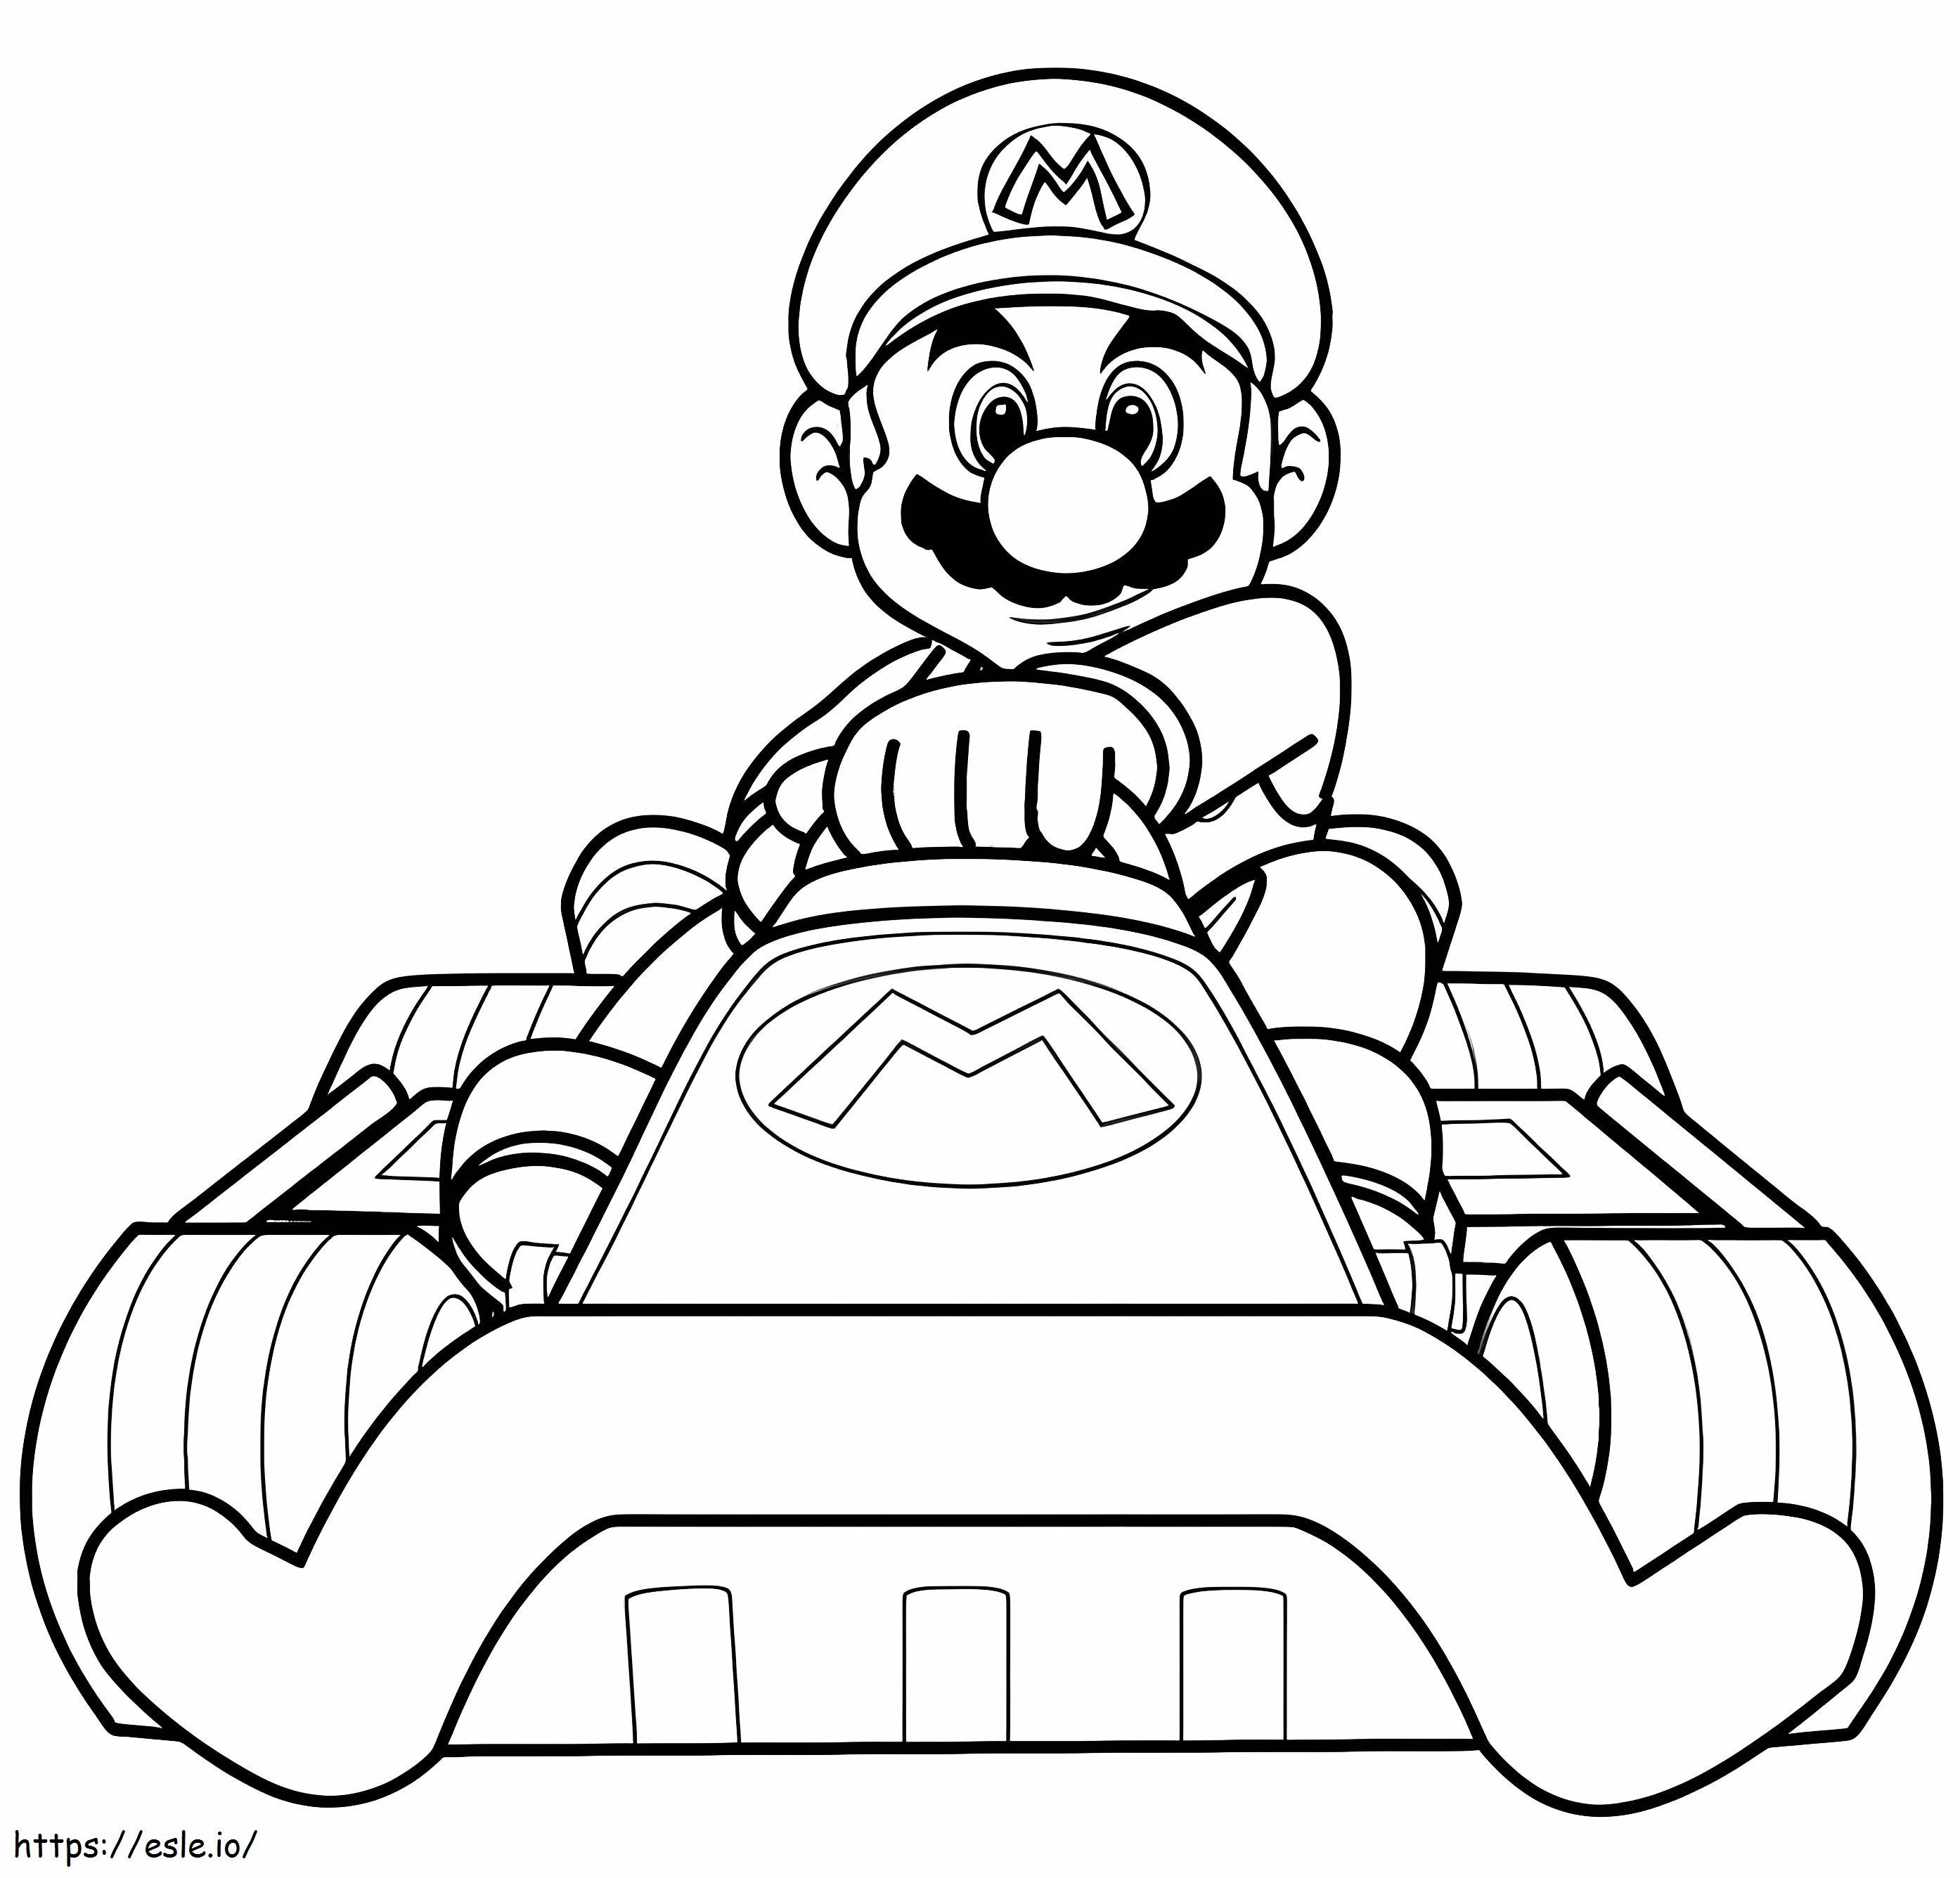 1578365496 Mario Kart coloring page